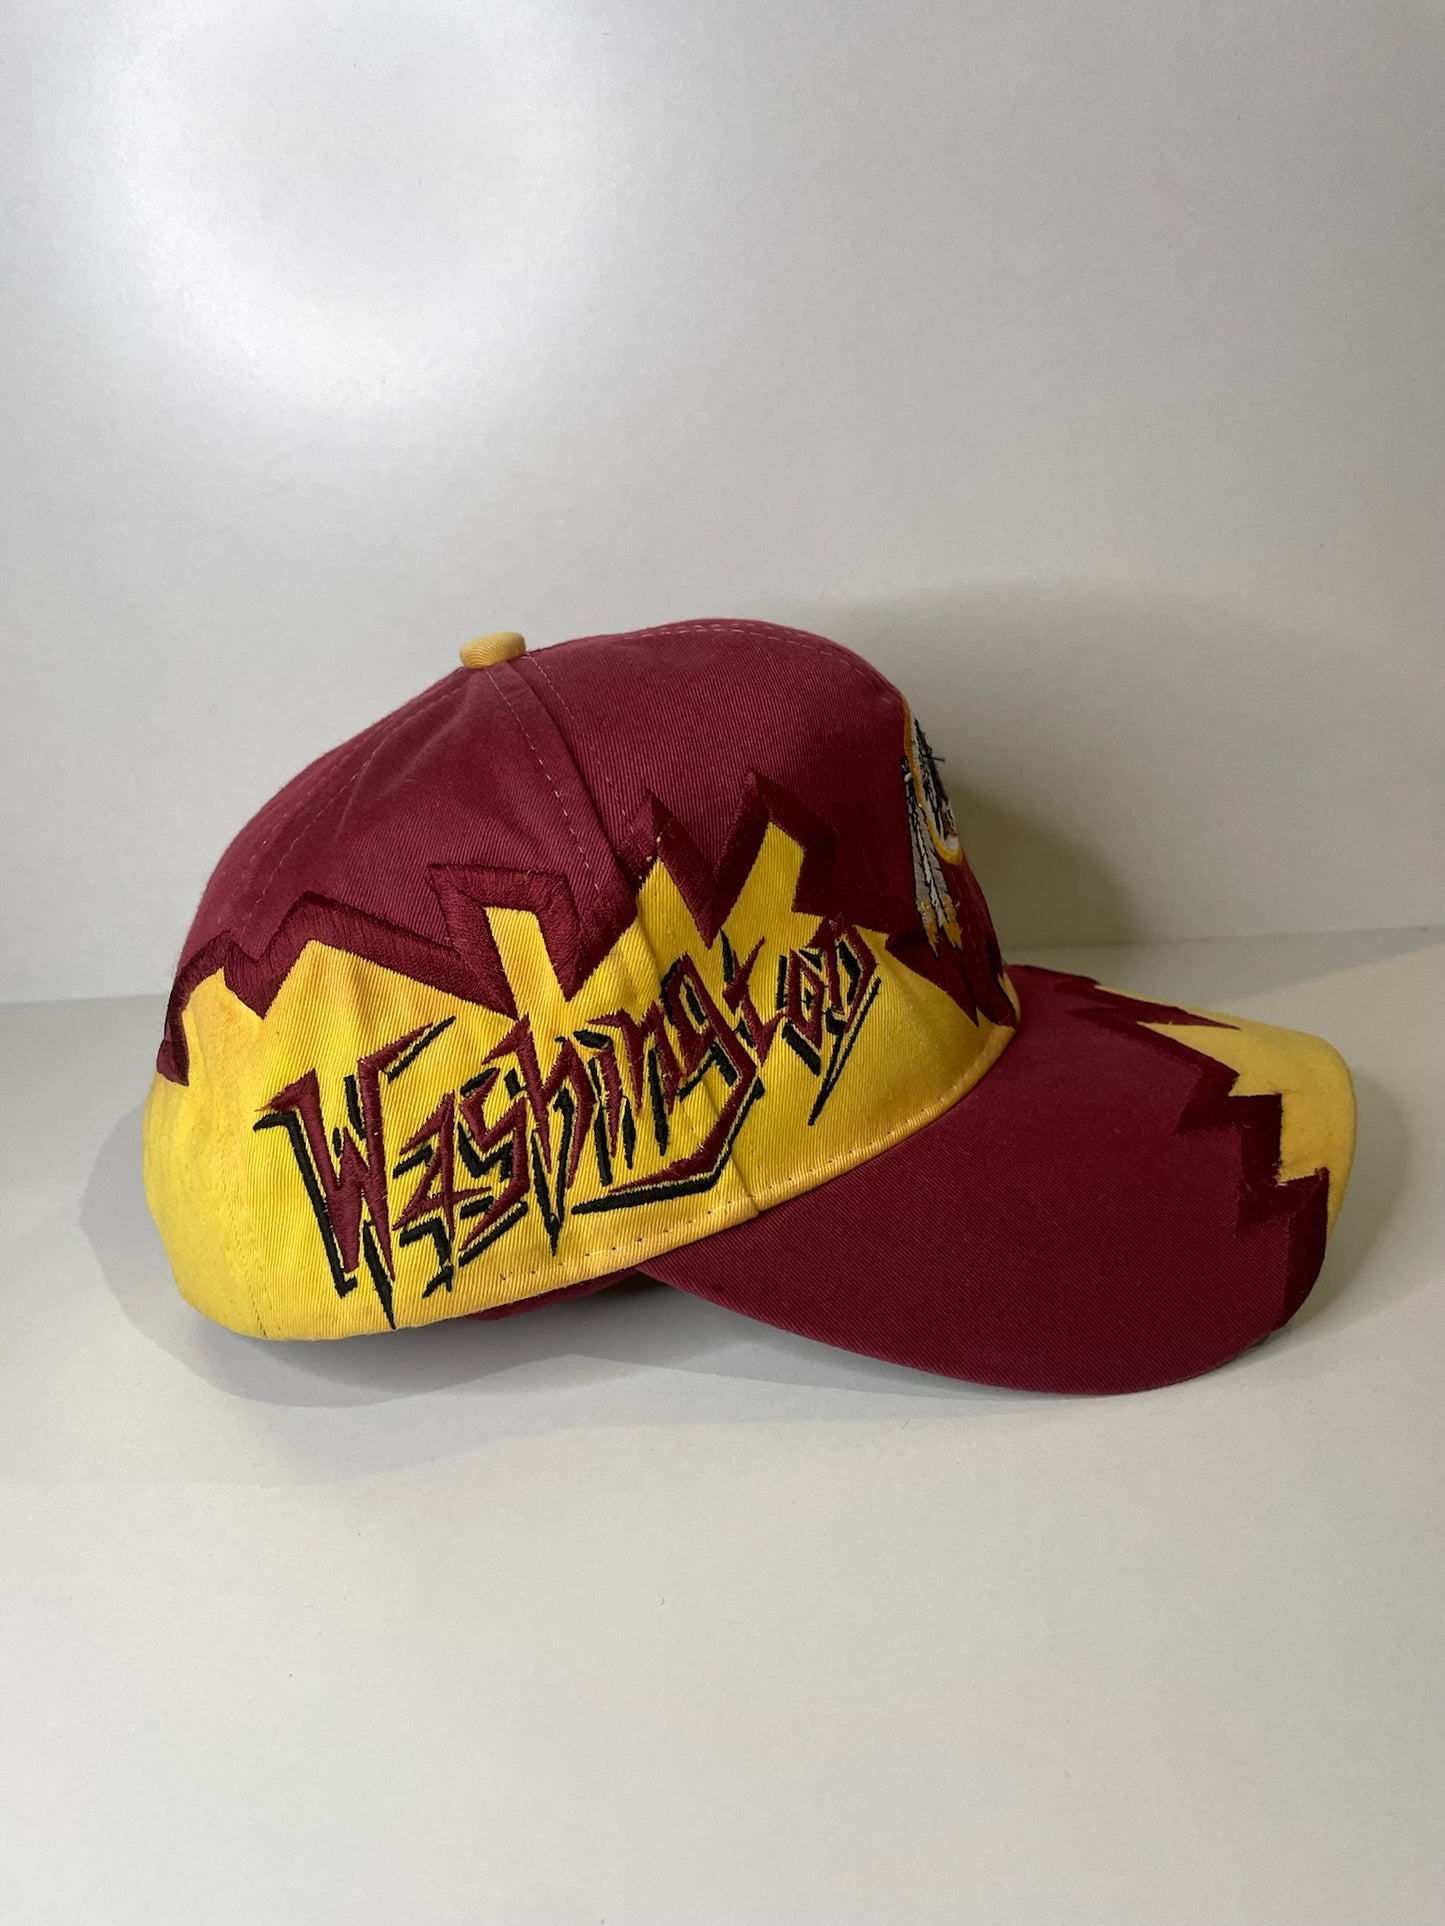 VINTAGE 90s WASHINGTON REDSKINS DREW PEARSON JAGGED GRAFFITI SNAPBACK CAP HAT